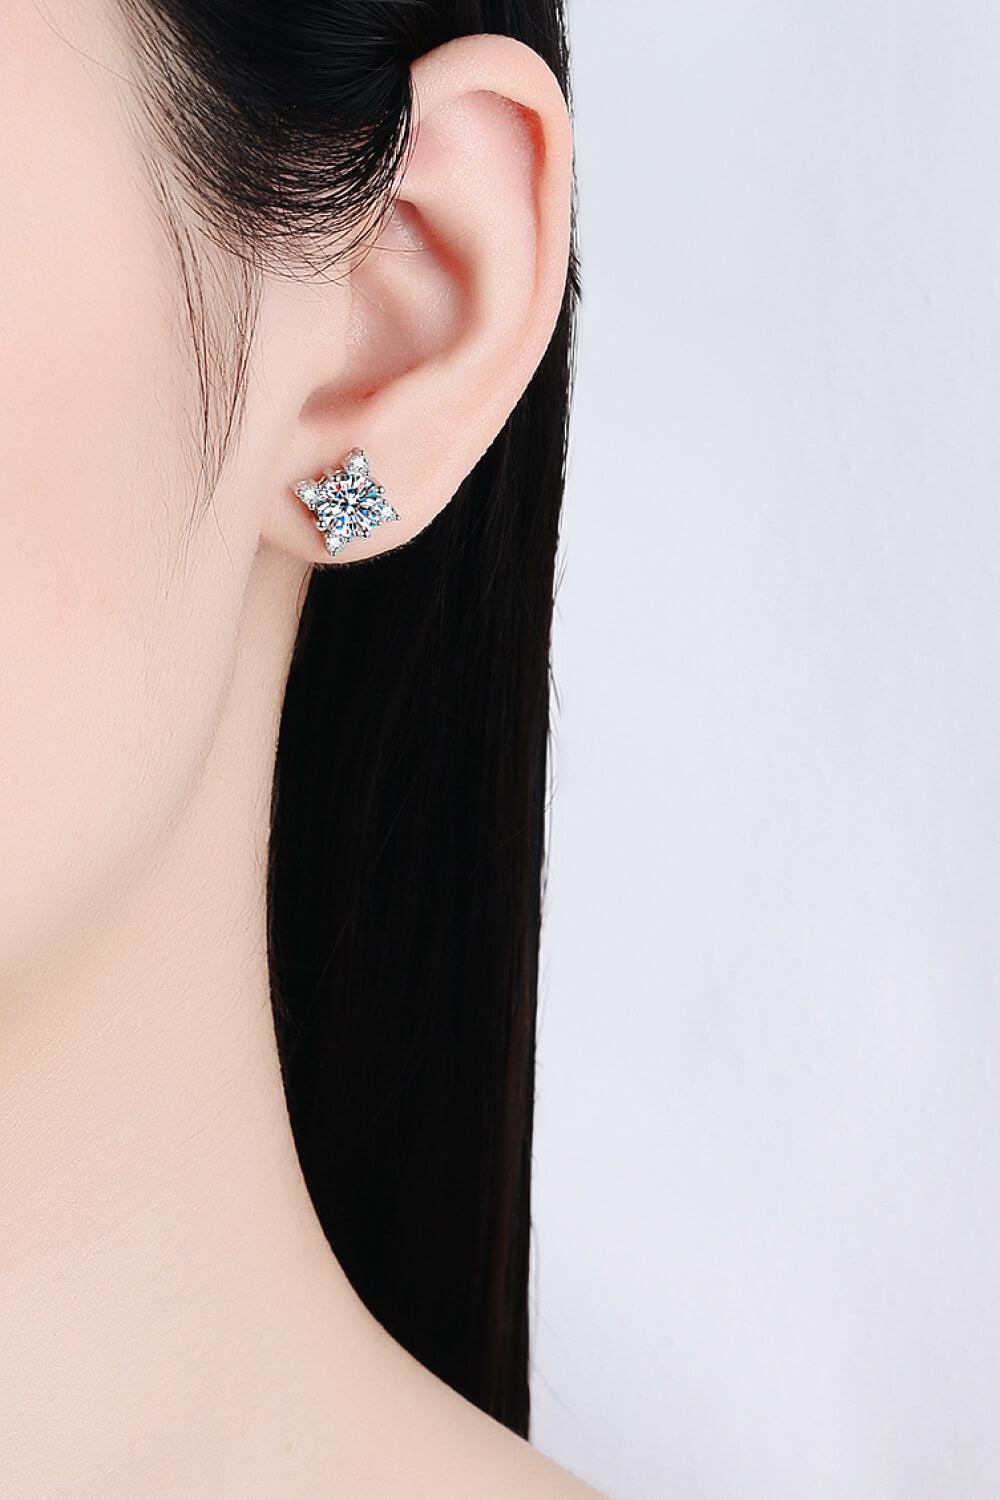 Four Leaf Clover 2 Carat Moissanite Stud Earrings BLUE ZONE PLANET